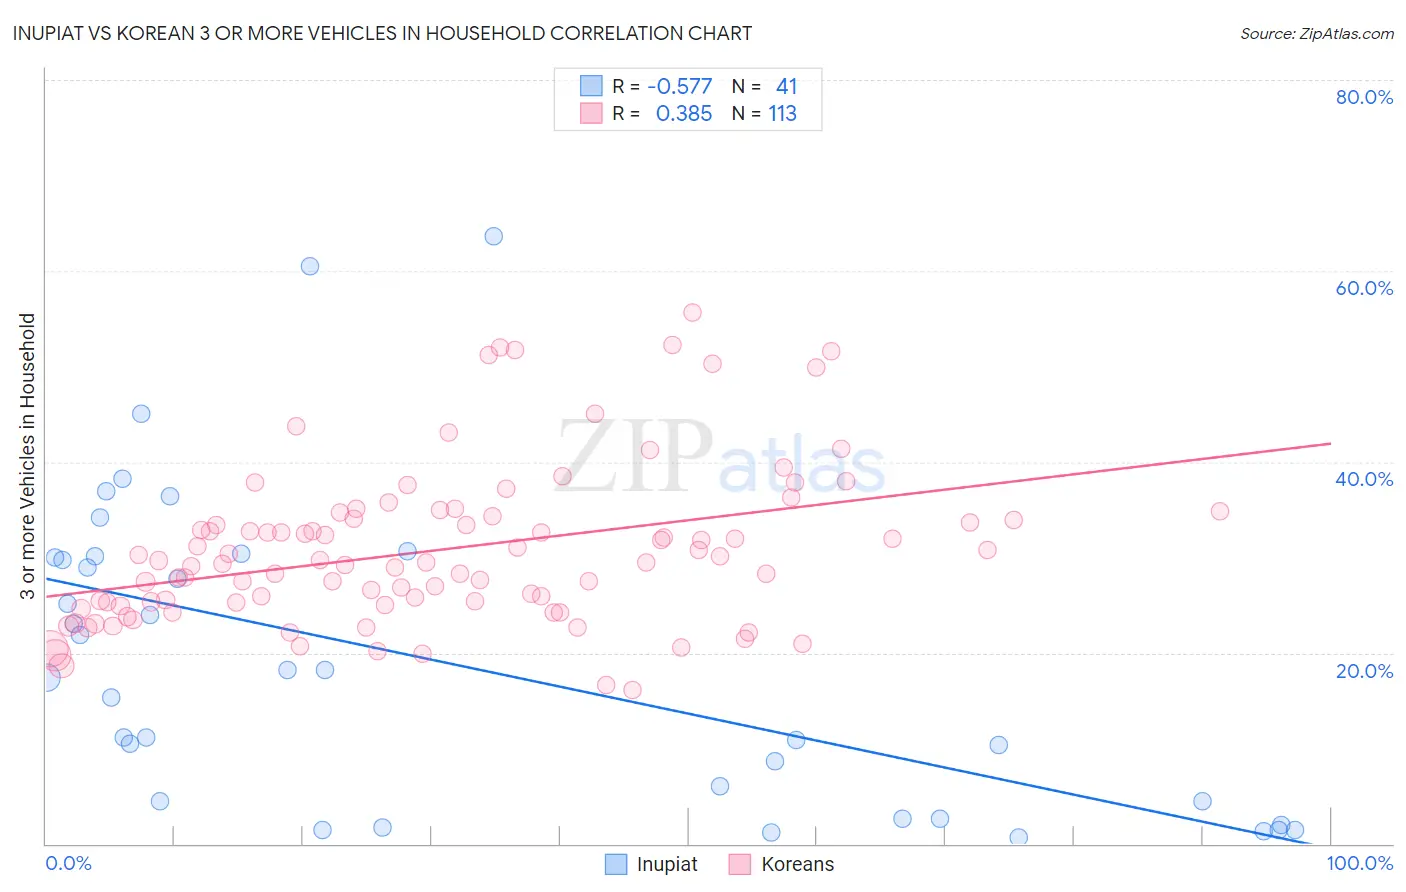 Inupiat vs Korean 3 or more Vehicles in Household